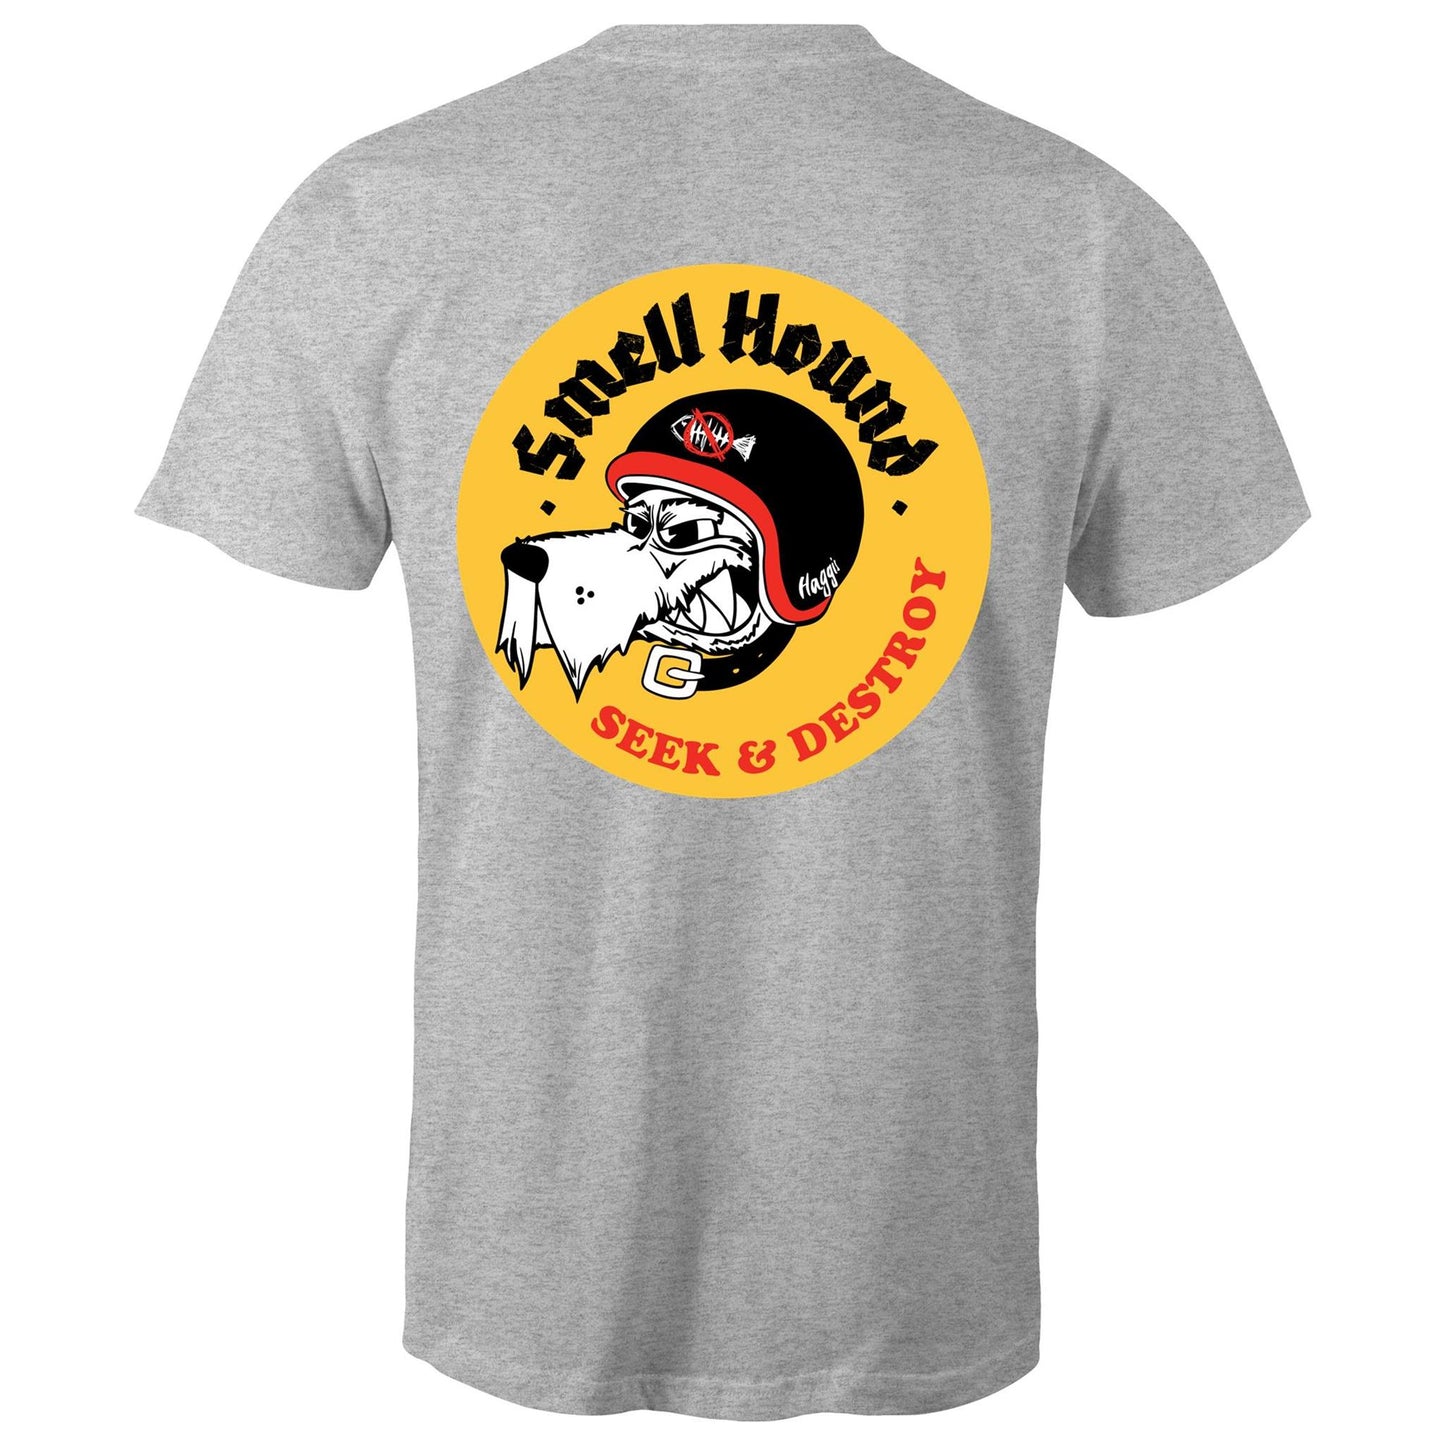 Smell Hound Biker Unisex T-Shirt